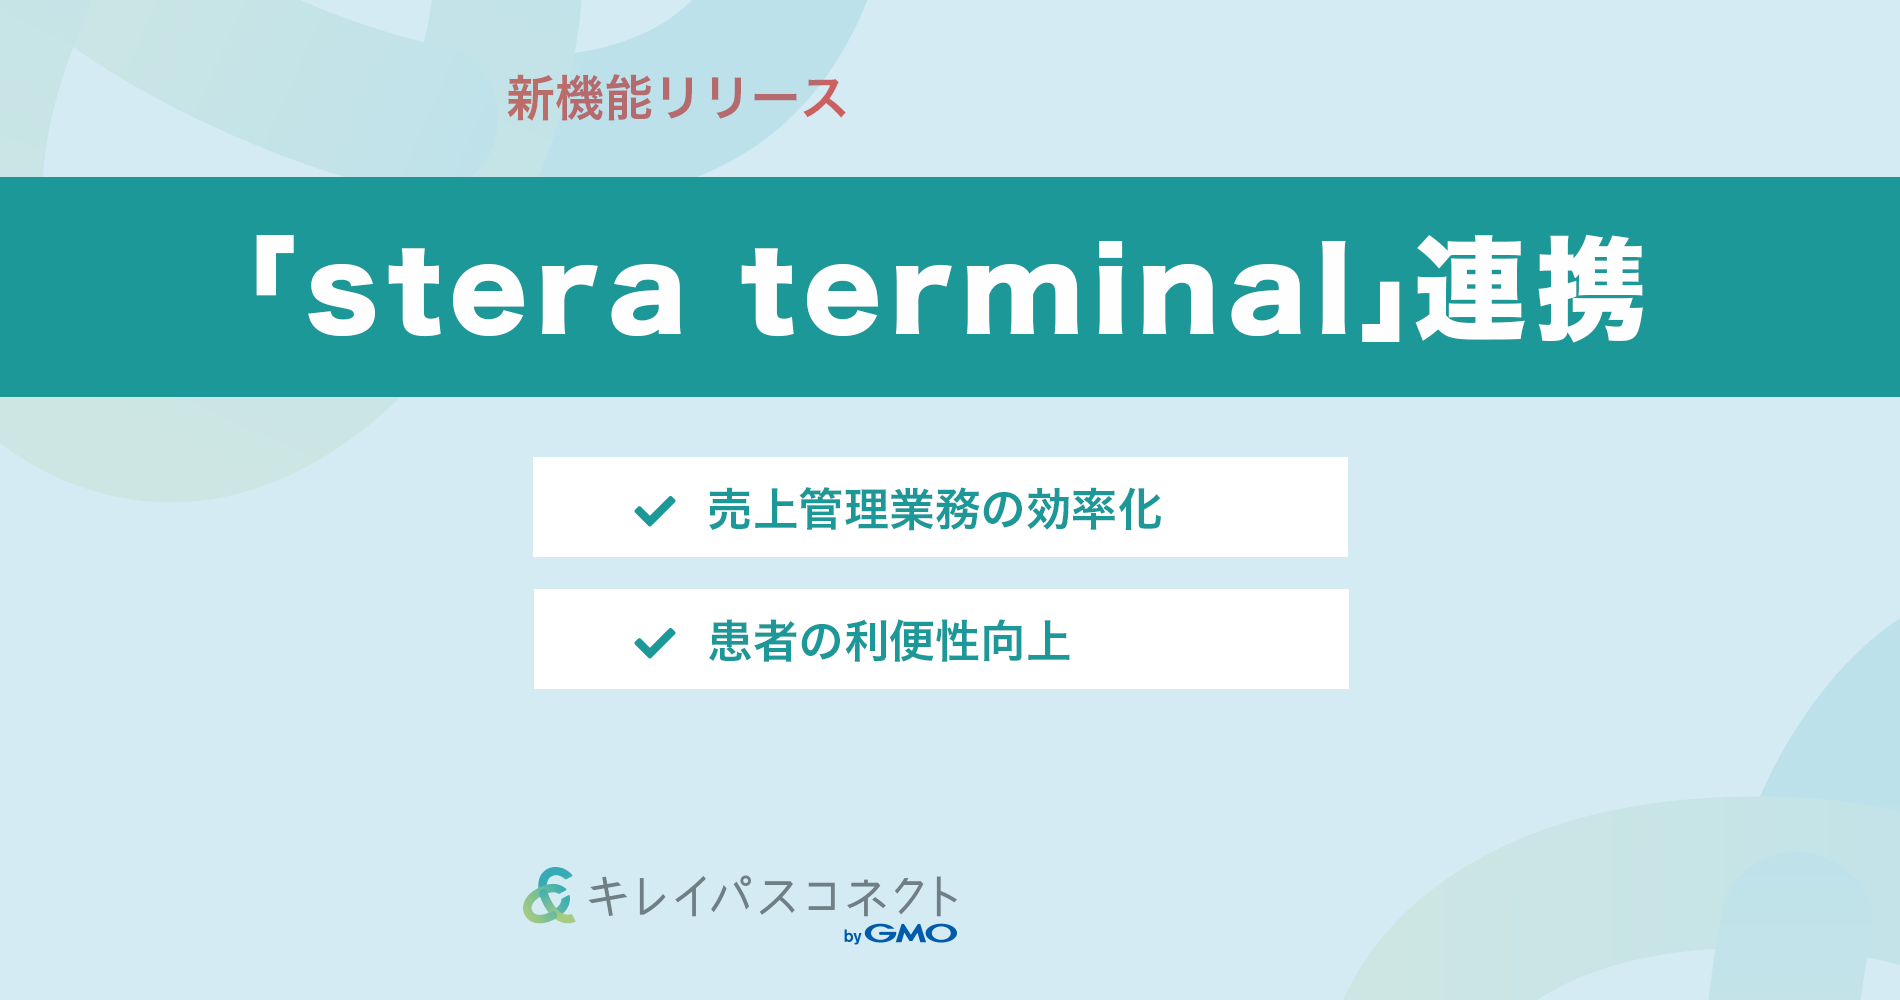 「stera terminal」と連携を開始